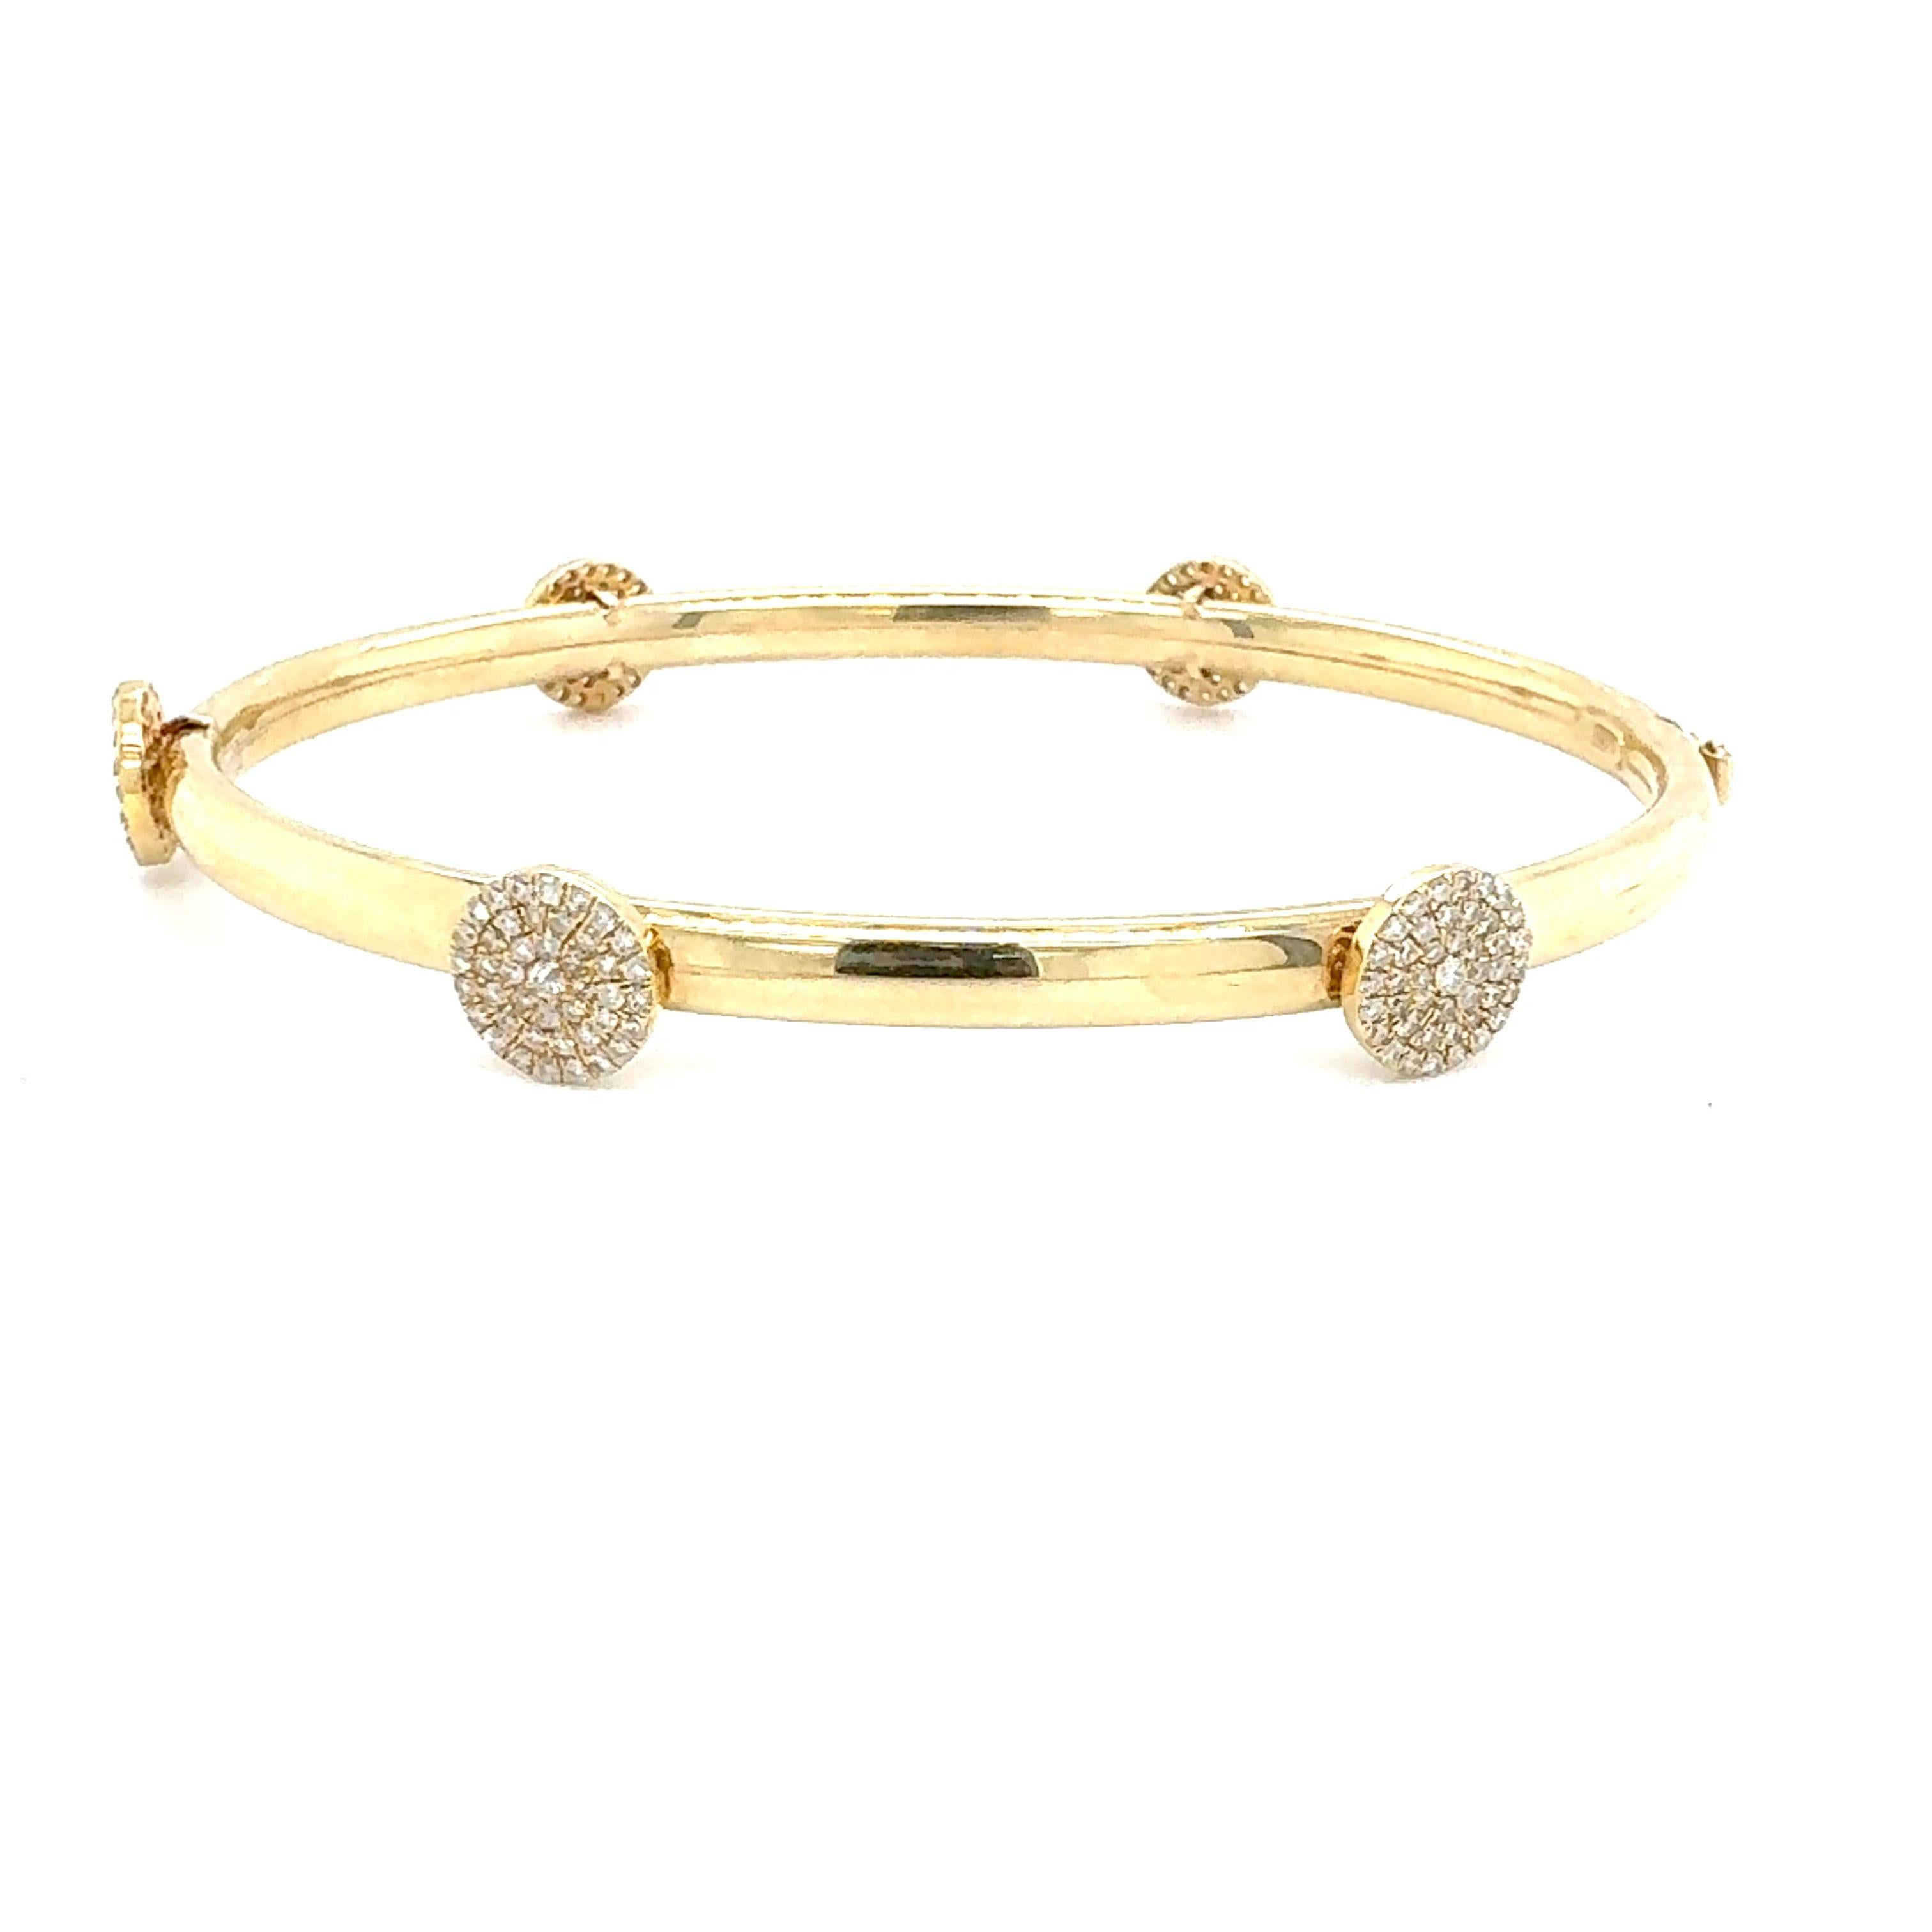 A natural 0.95-carat diamond bangle bracelet set in 14-Kt yellow gold. 